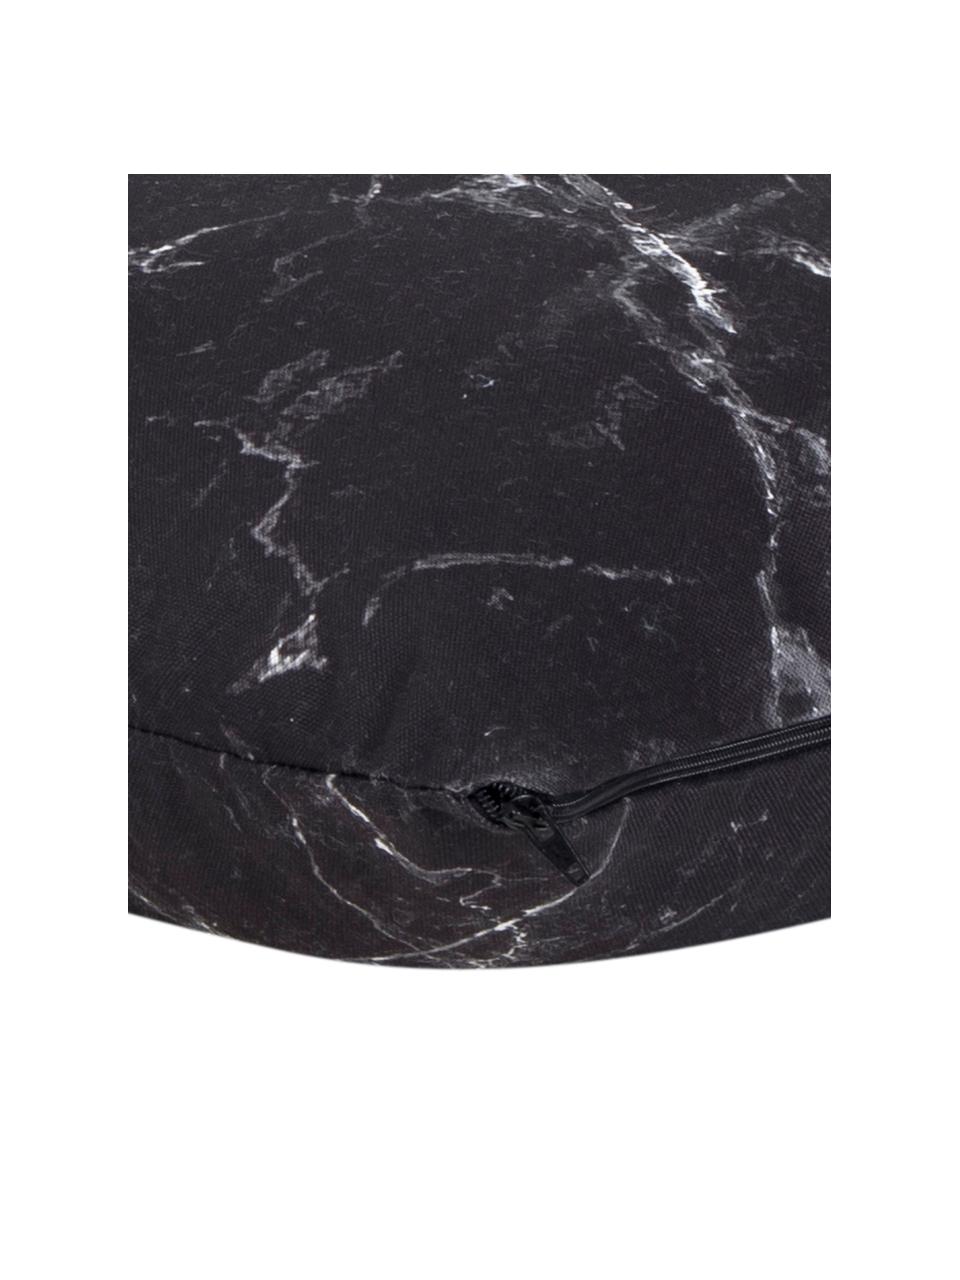 Kussenhoes Malin, Weeftechniek: perkal, Marmerpatroon, zwart, 45 x 45 cm